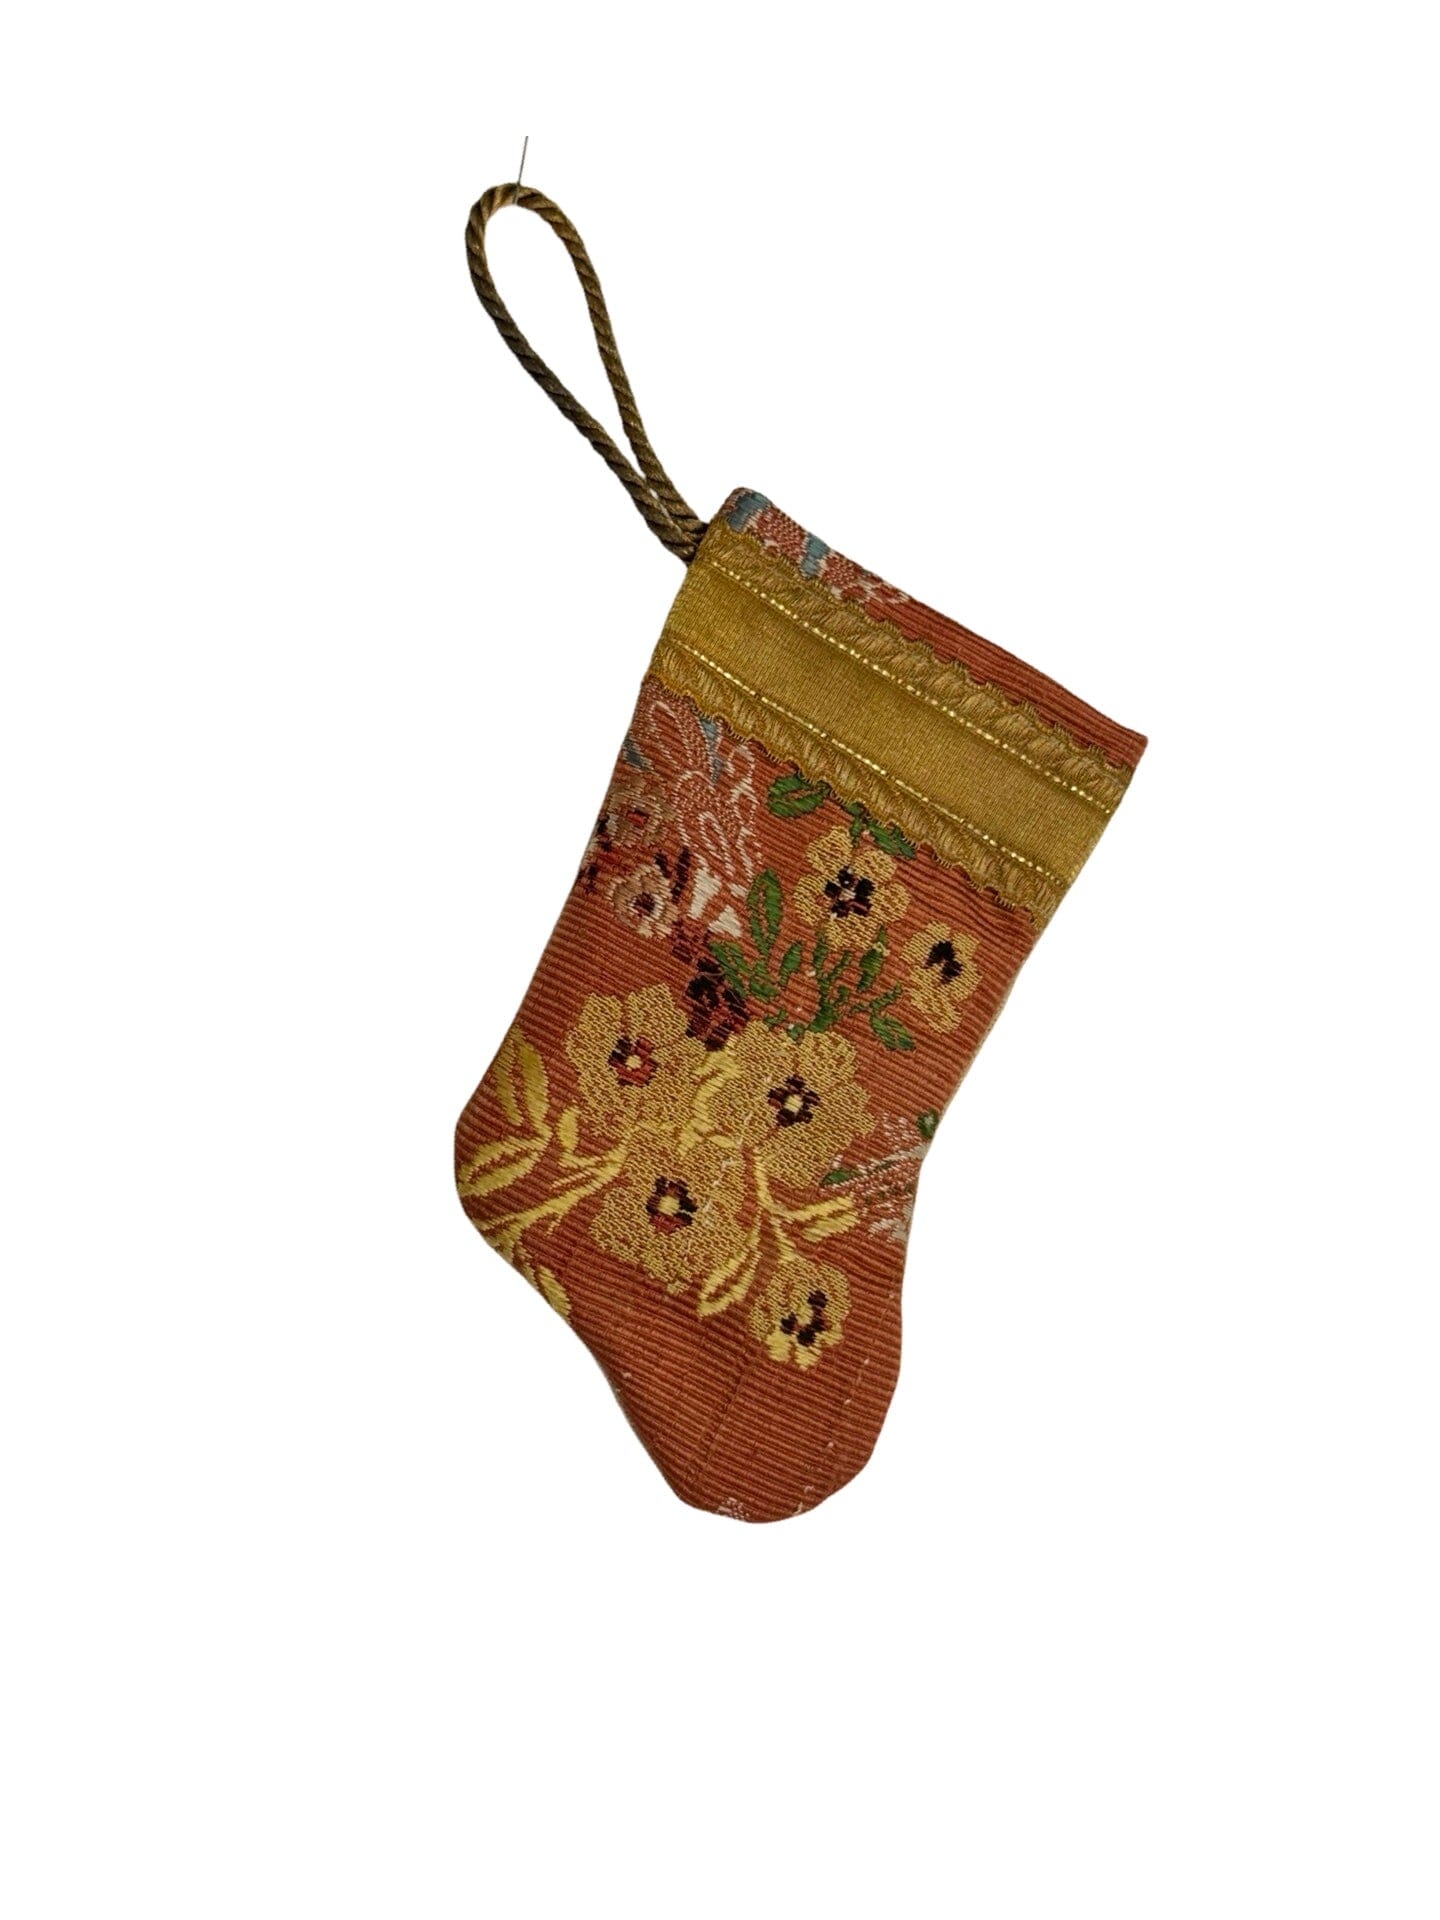 Handmade Mini Stocking Made From Vintage Fabric and Trims- Bronze Rose Floral Ornament B. Viz Design G 